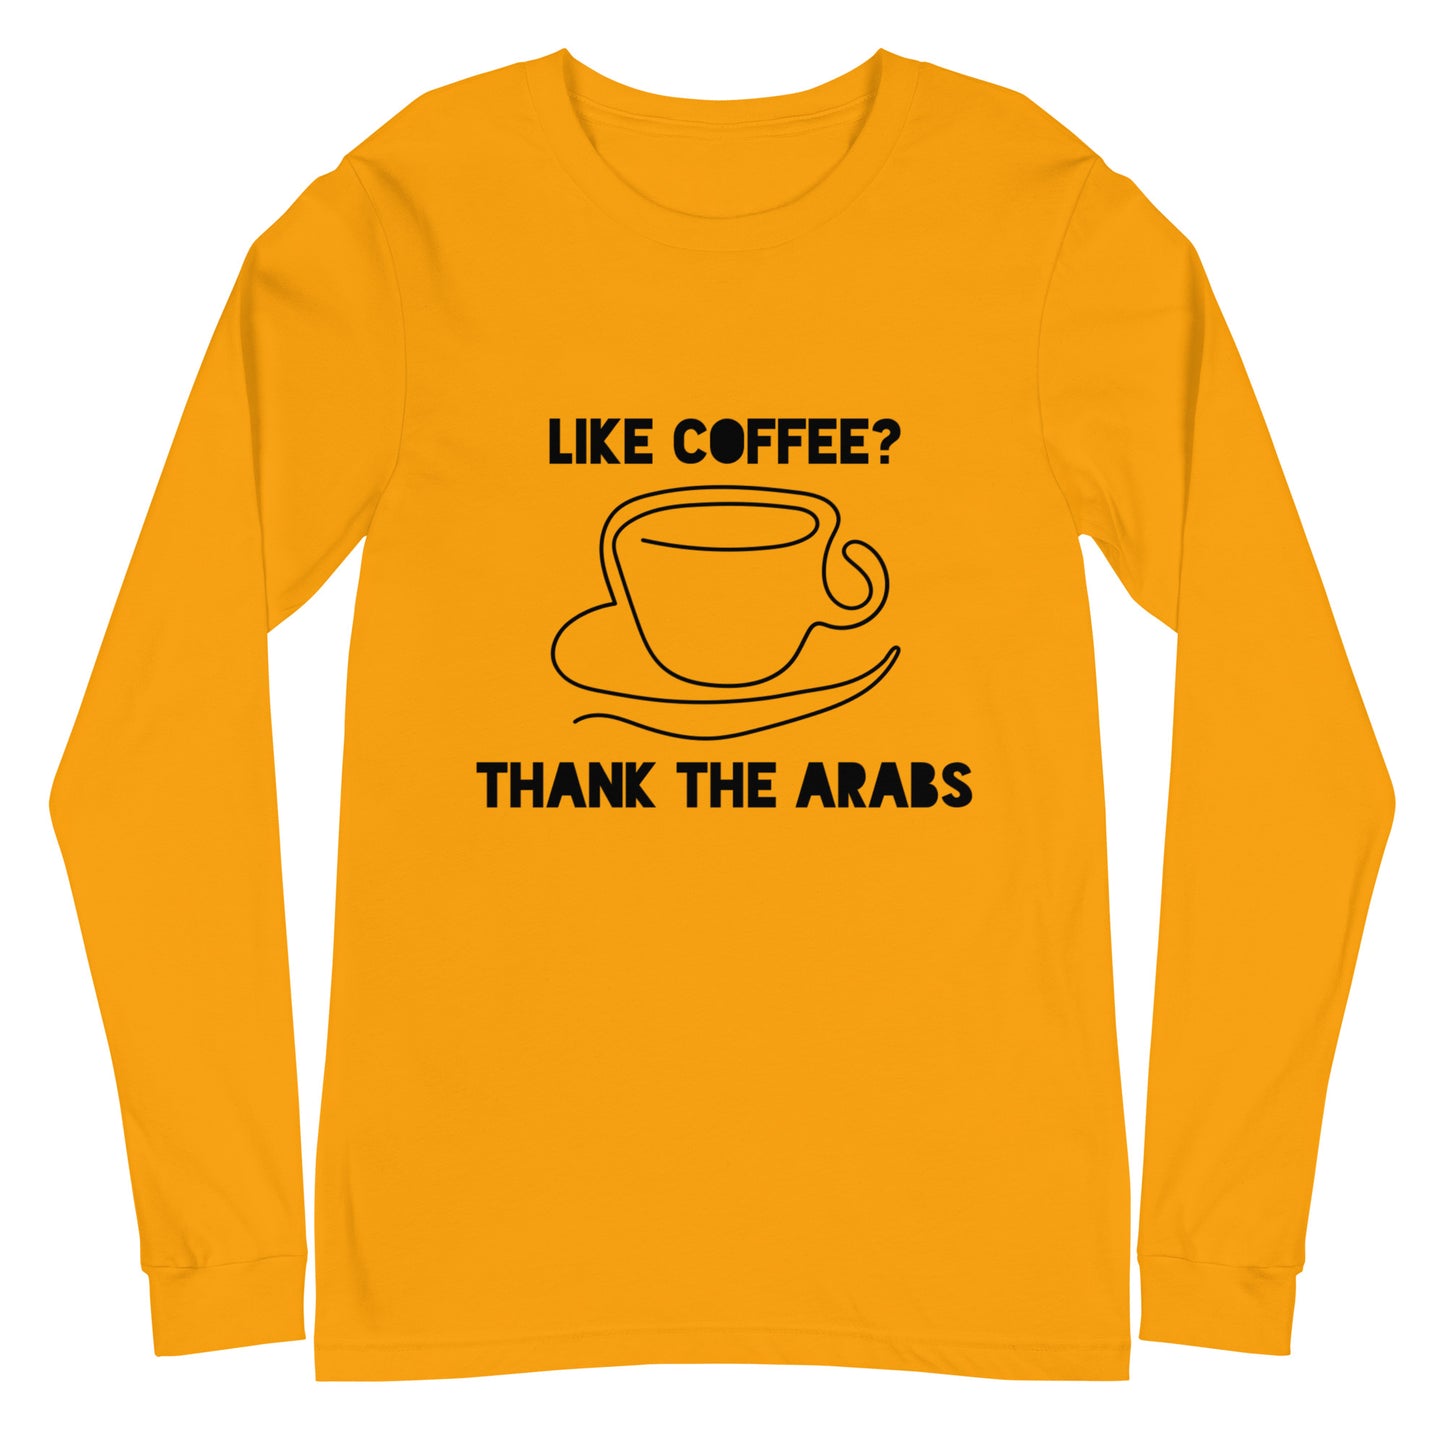 Like coffee? Thank the Arabs - Unisex Long Sleeve Tee